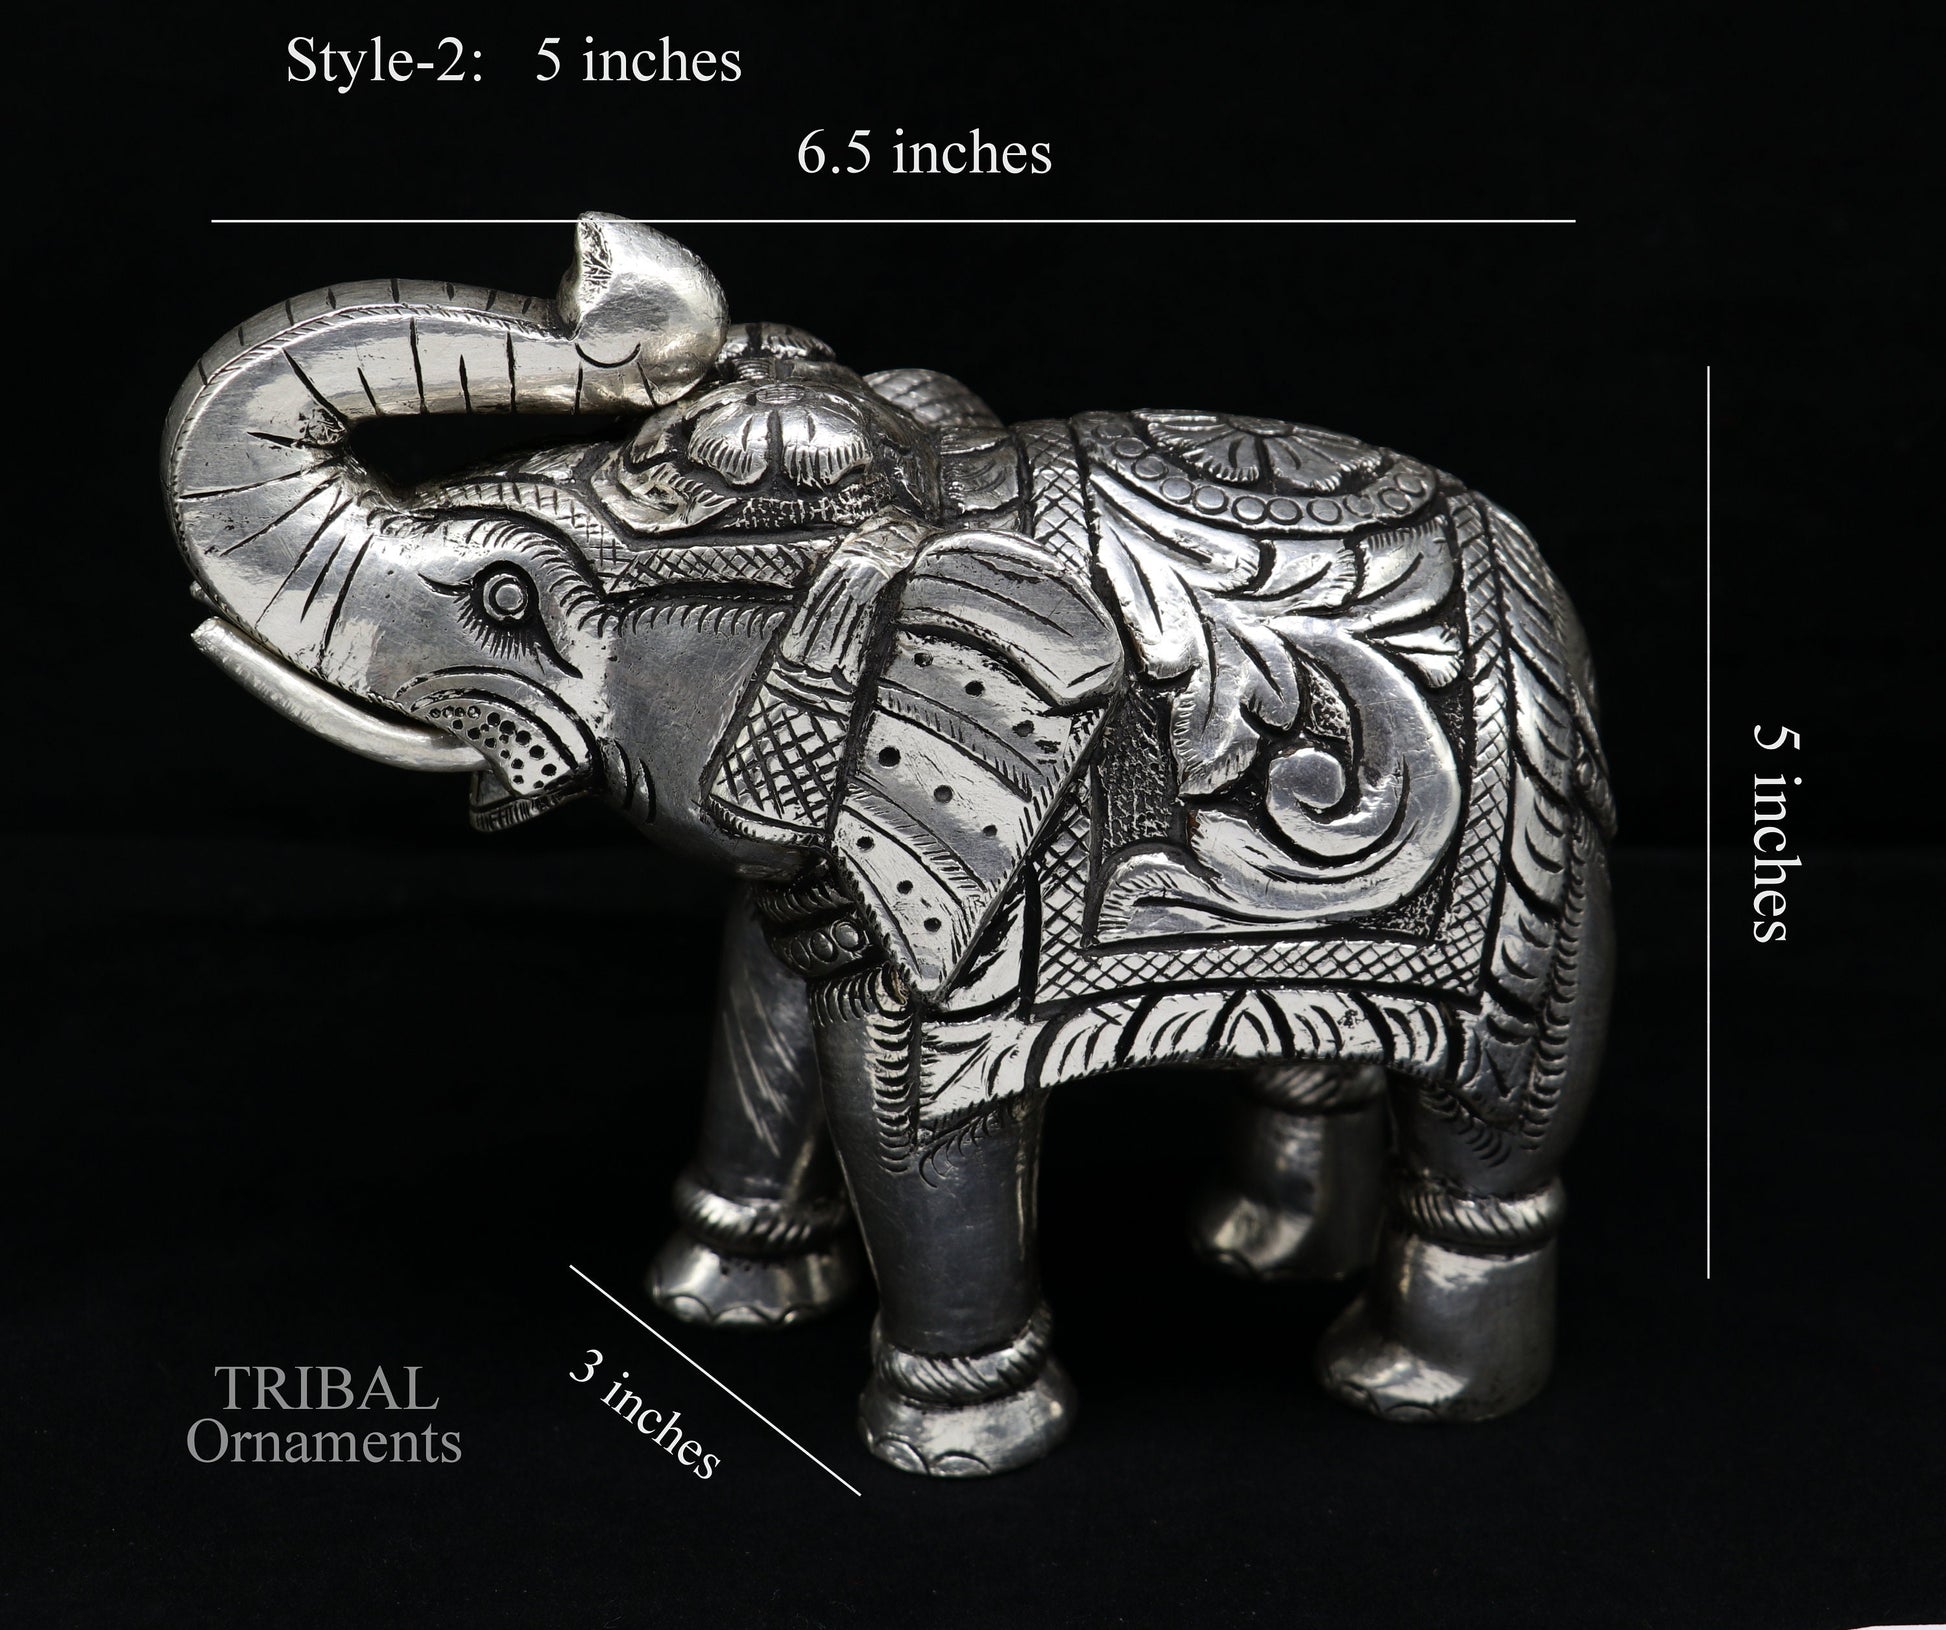 999 fine silver handcrafted Nakshi design wooden base upper trunk Elephant statue puja article figurine for wealth & prosperity art533 - TRIBAL ORNAMENTS